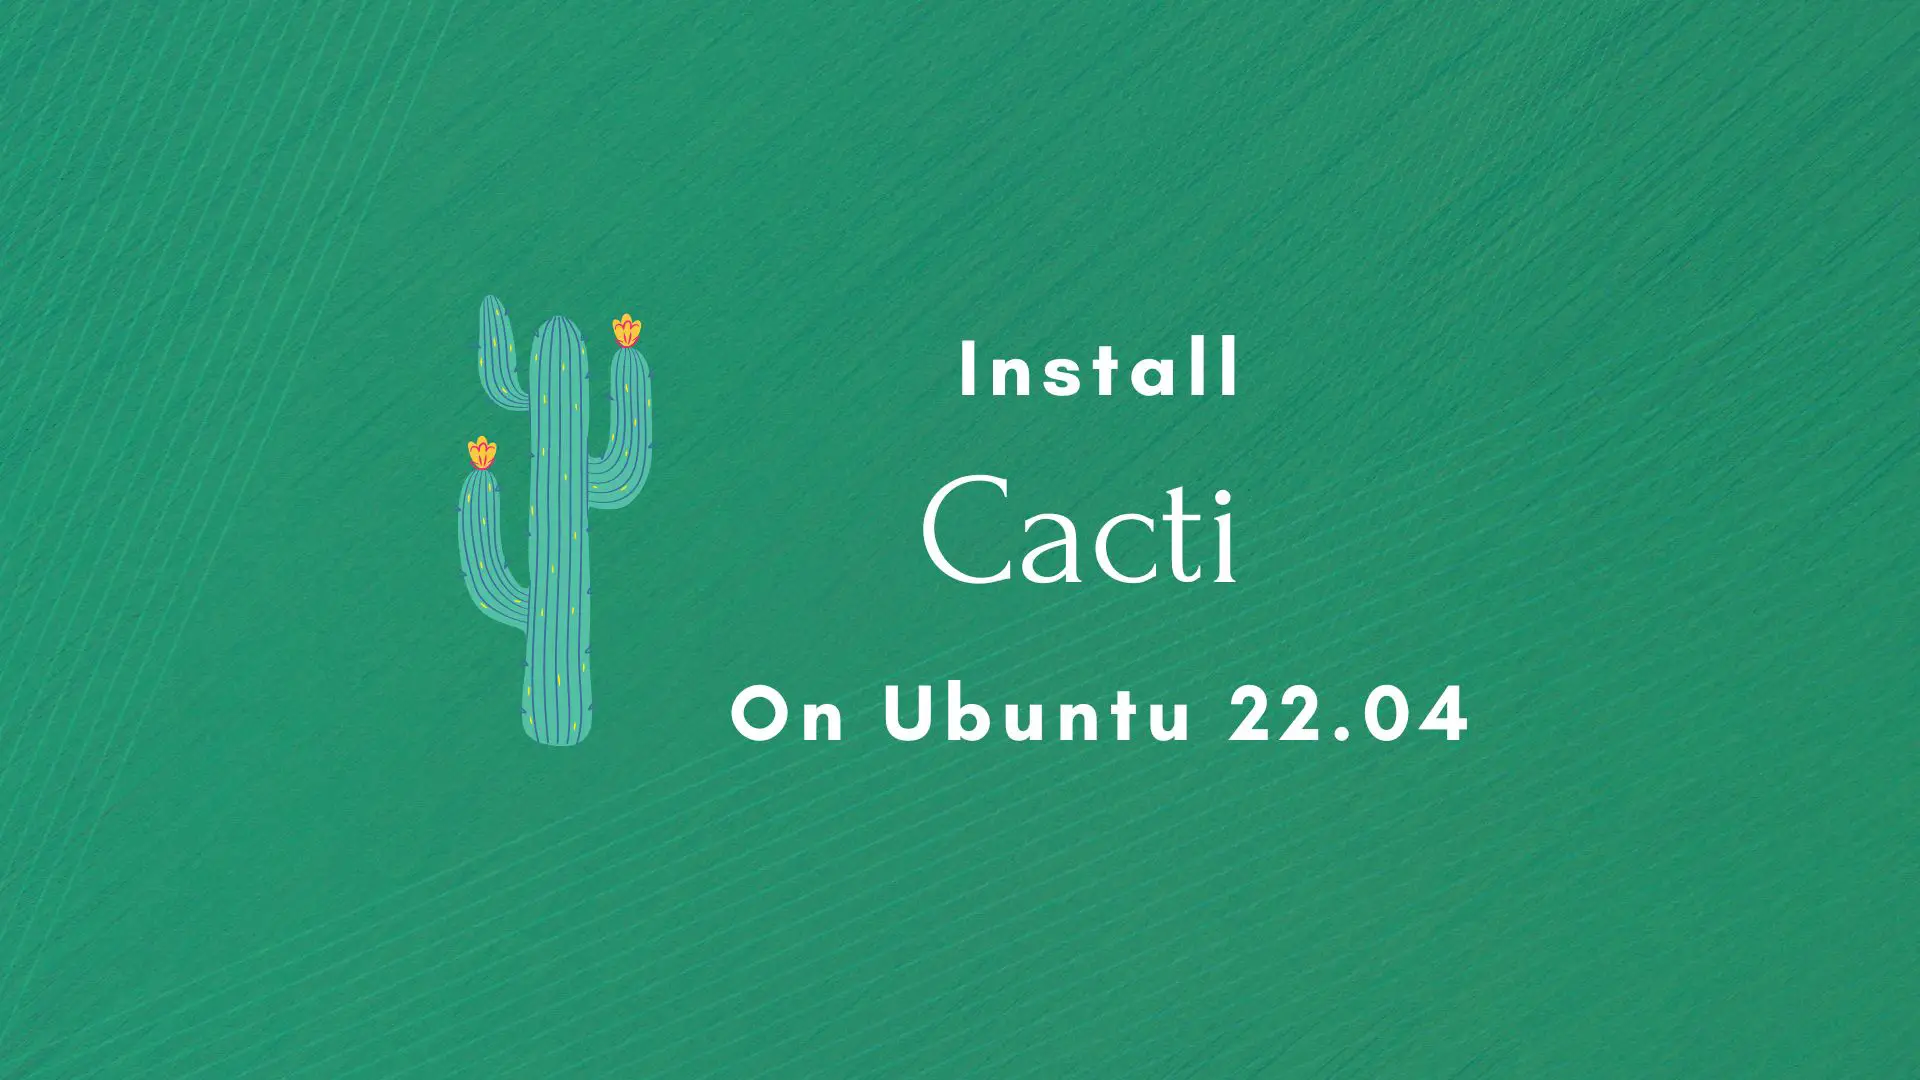 Install Cacti on Ubuntu 22.04